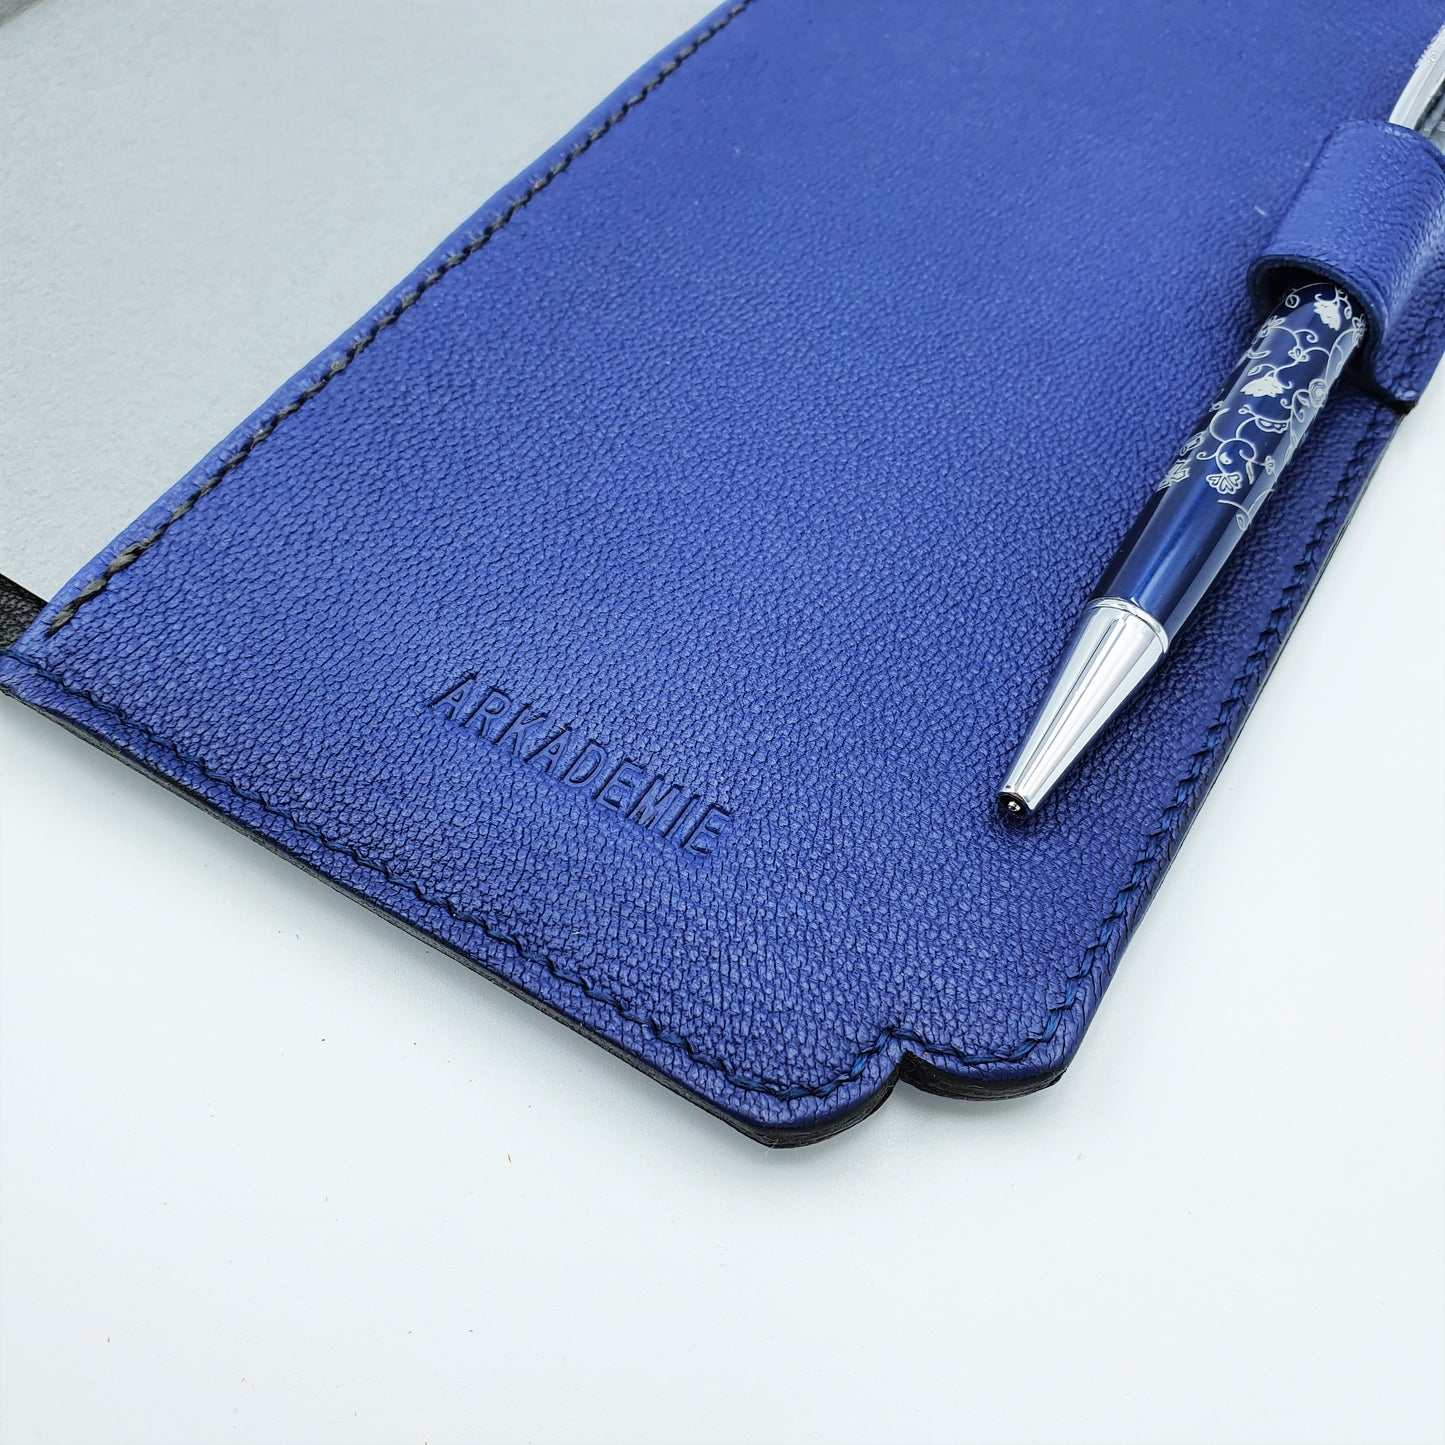 Studio Arkademie MING TEN PEONIES A5 Portrait Notebook Sleeve, Blue & White